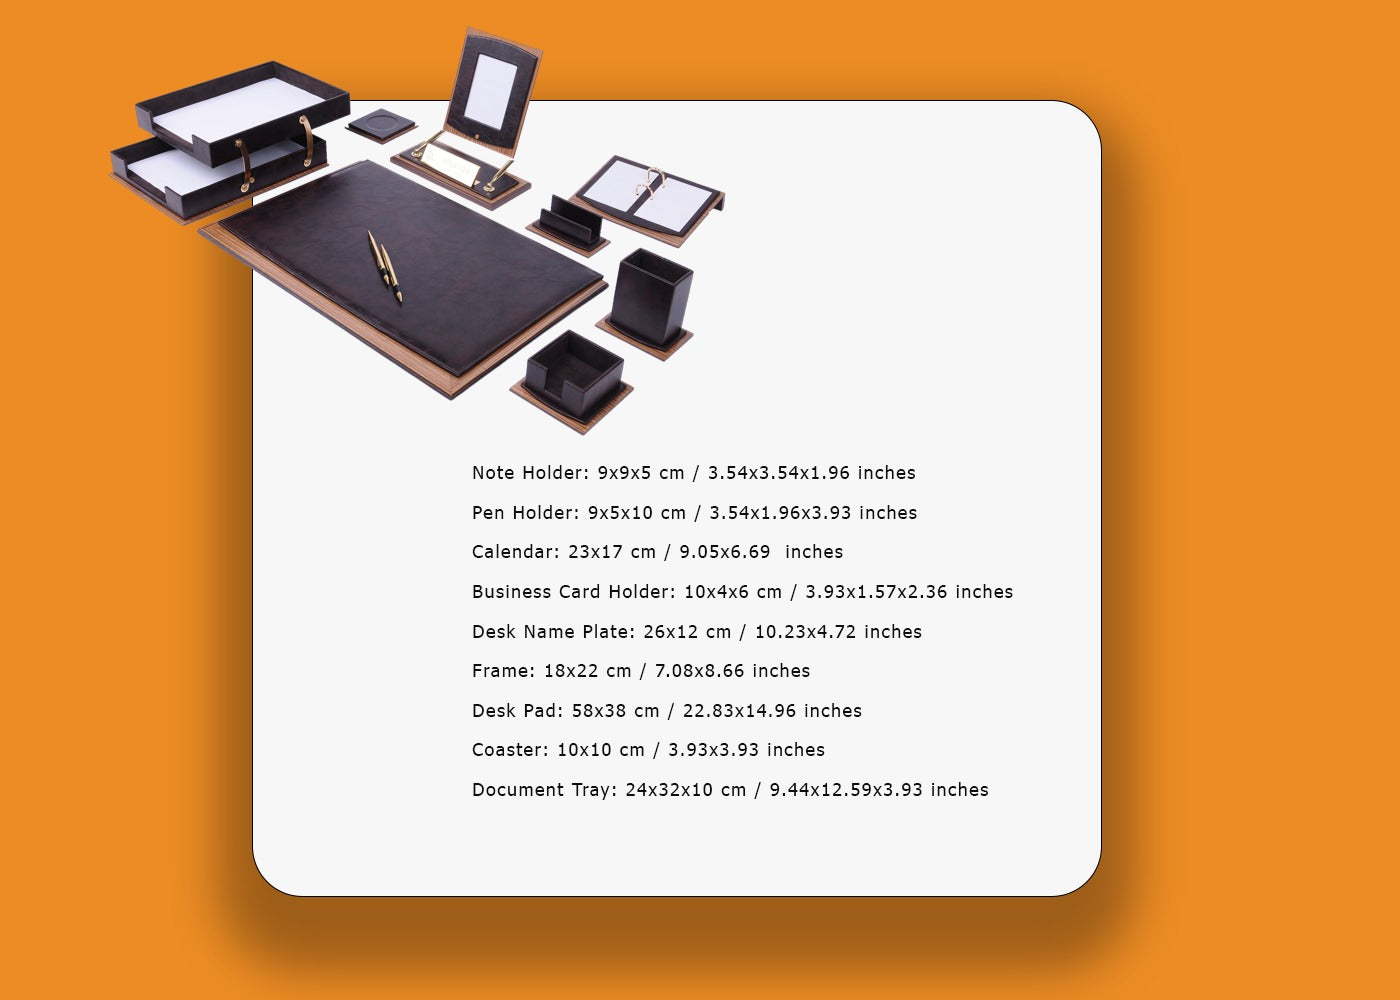 MOOG 13 Pieces Luxury Desk Set-Desk Office Accessories-Storage-Desk Organizers And Accessories-Office Desk Accessories-Desk Organizer Set-Desk Pads & Blotters - 13 PCS